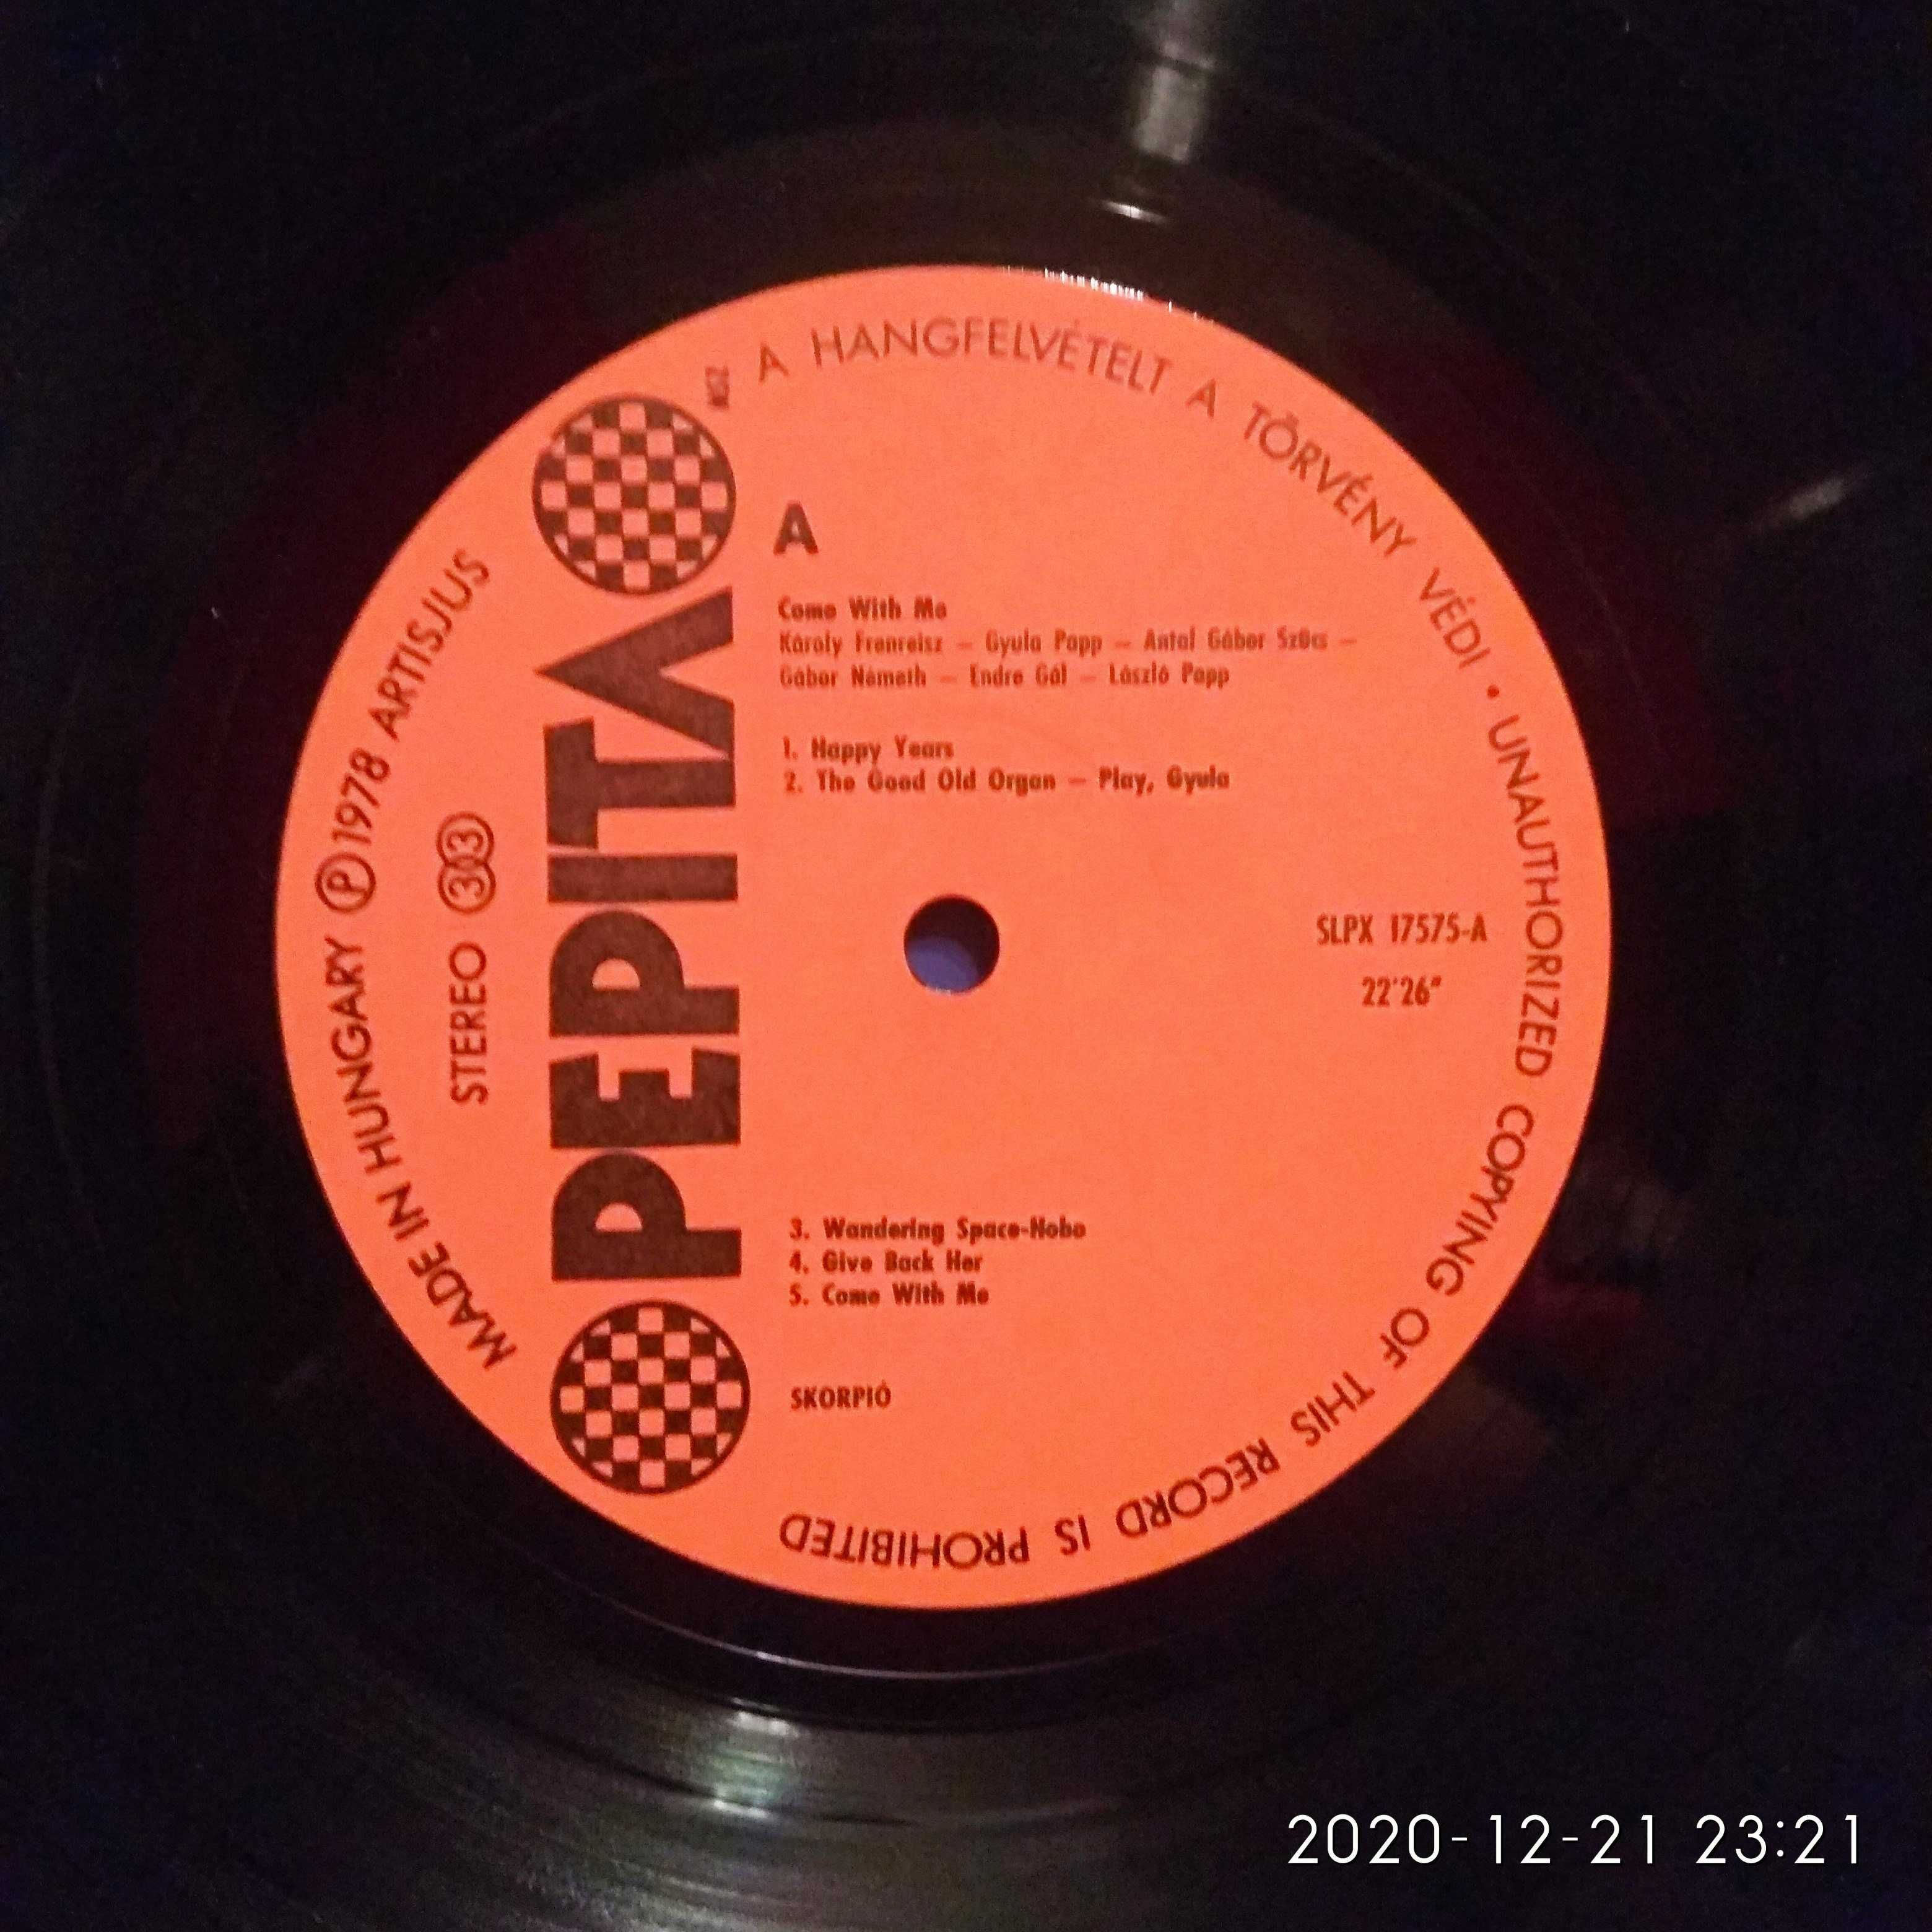 SKORPIO - GYERE VELEM!  Export Version 1978  Prog Rock  ЕХ+/ЕХ+